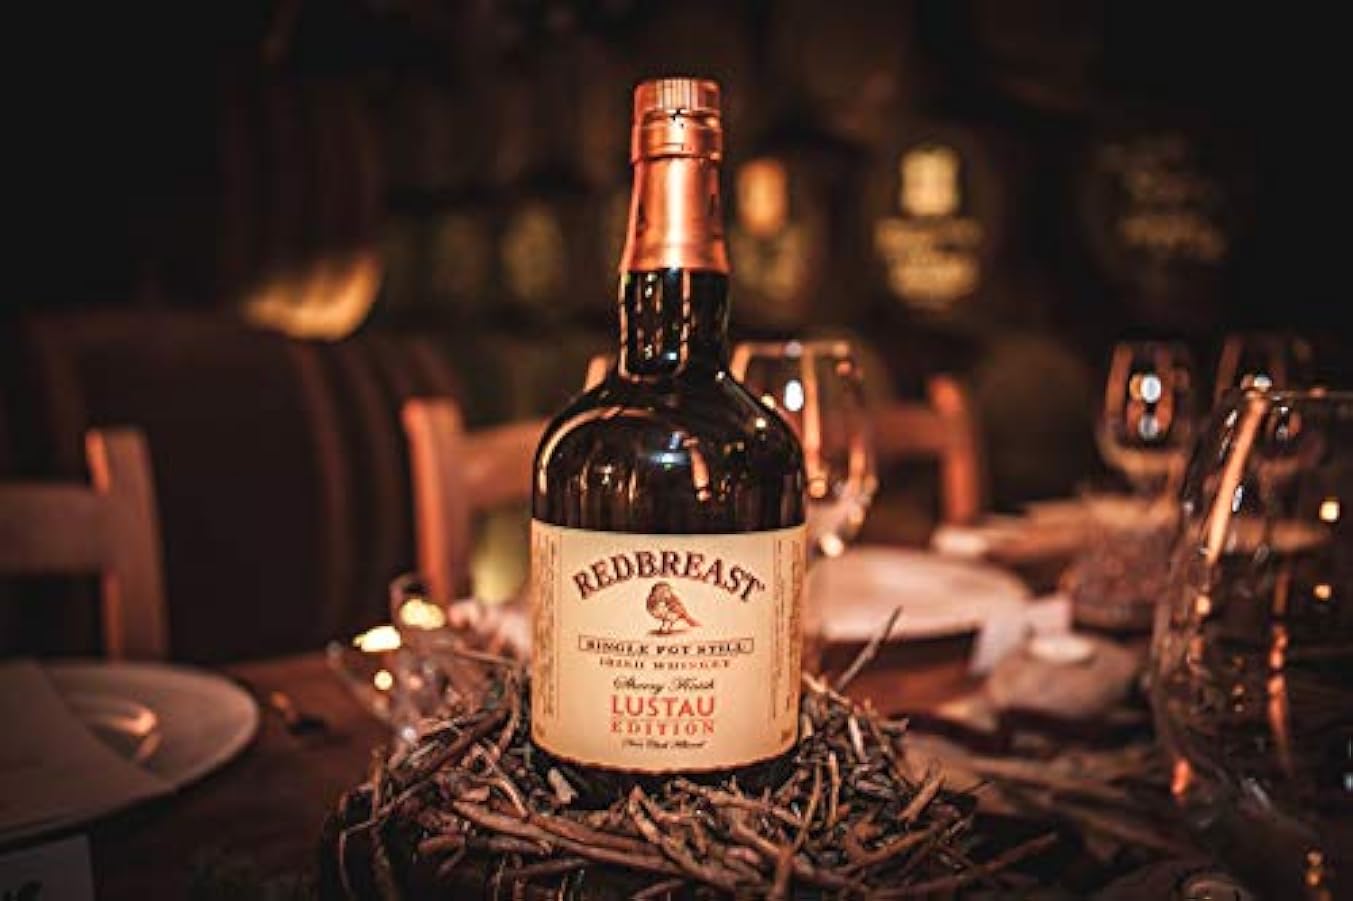 Redbreast Lustau Edition Single Pot Still Sherry Finish Whisky Irlandais, 70 cl 186426674